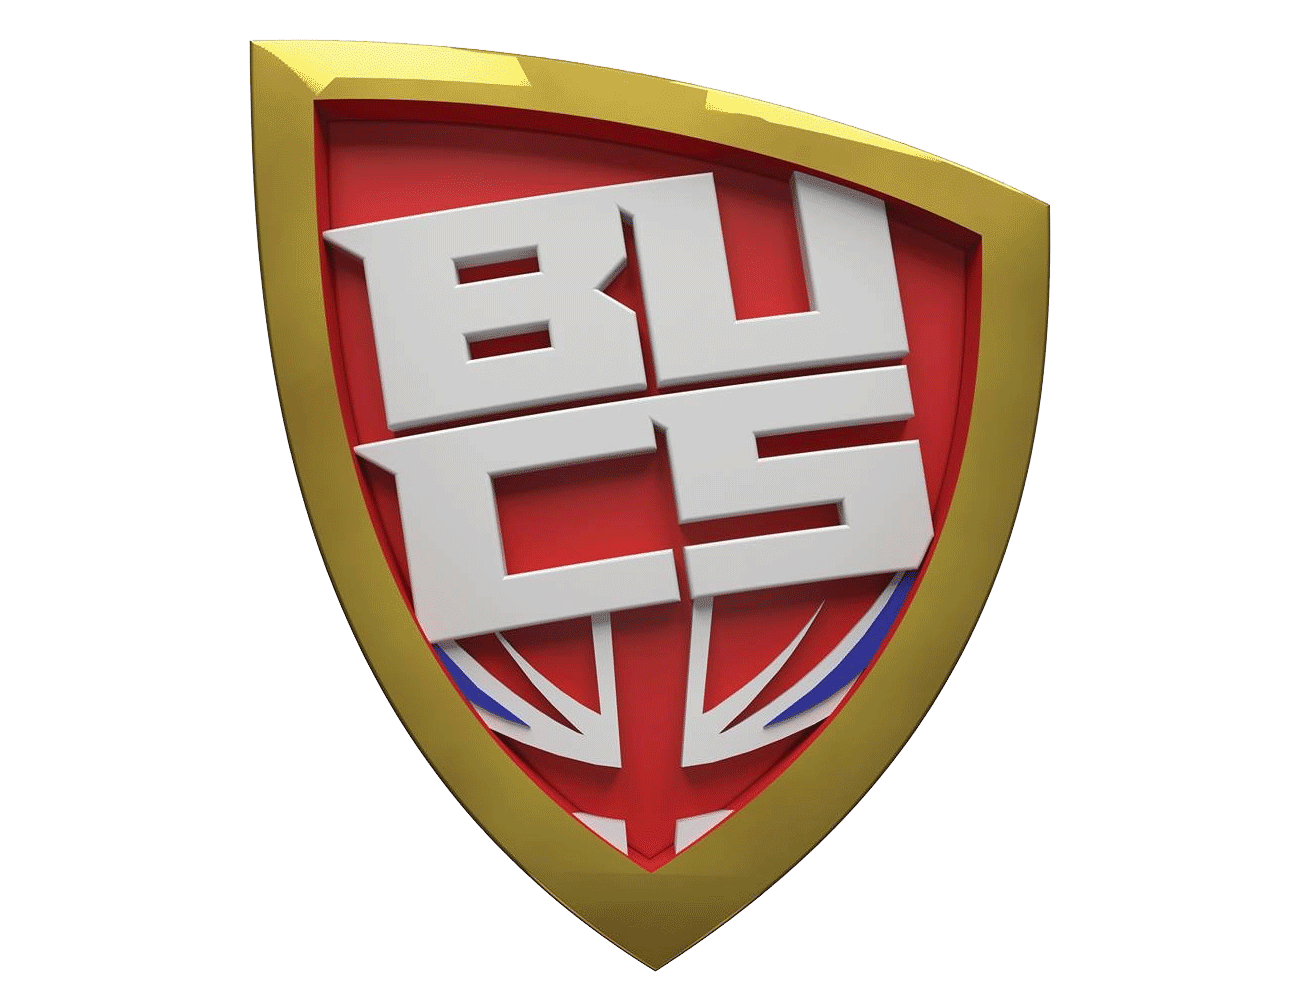 BUCS logo